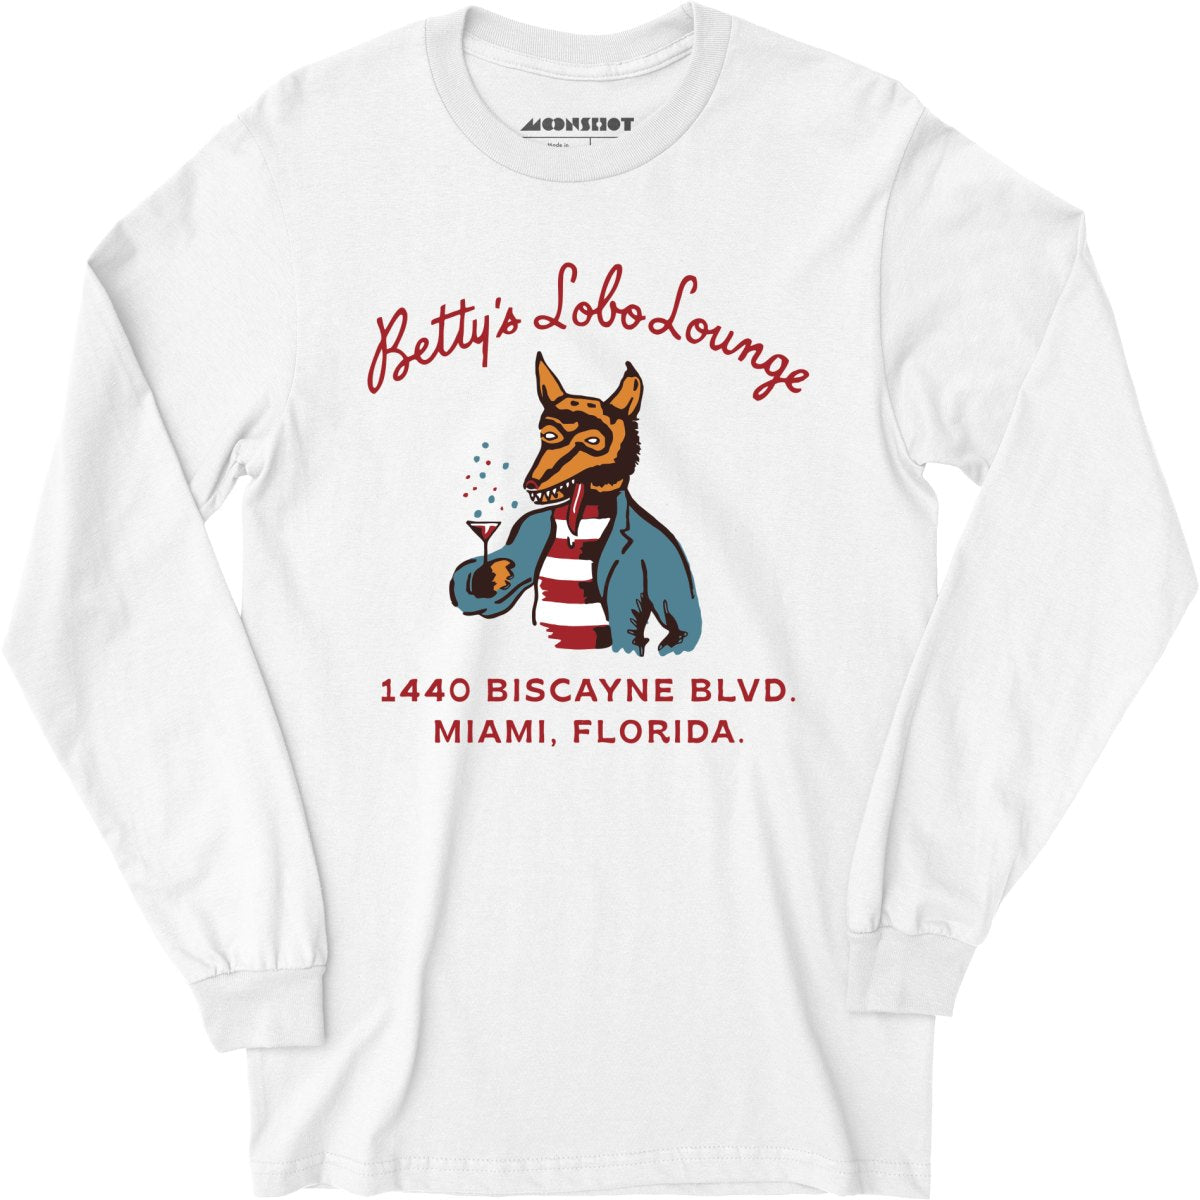 Betty's Lobo Lounge - Miami, FL - Vintage Restaurant - Long Sleeve T-Shirt